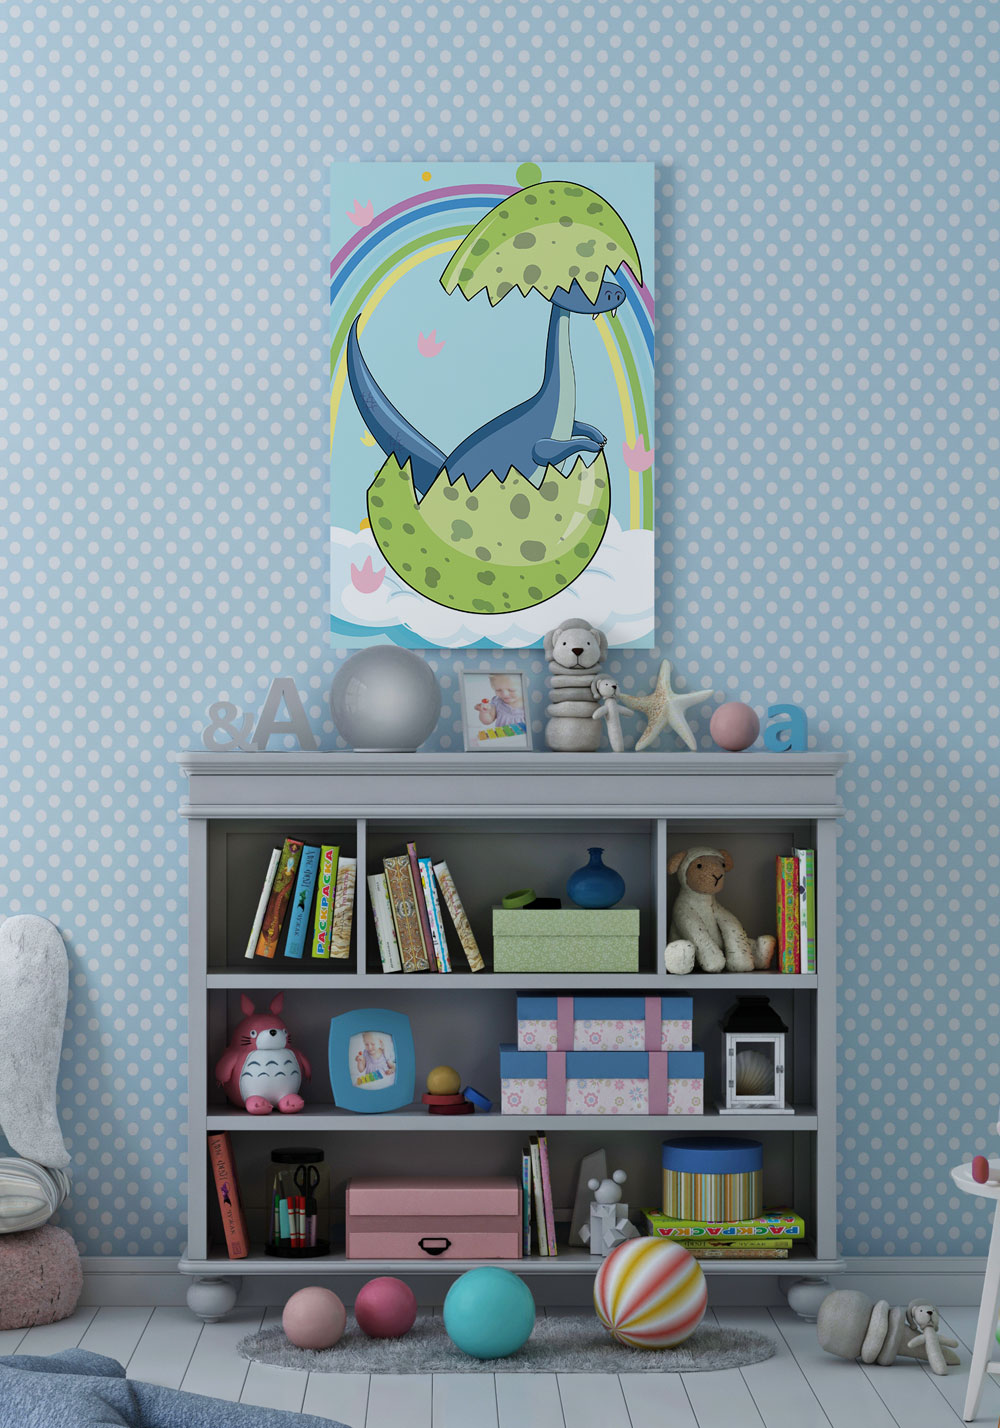 Bébé dragon bleu coquille arc-en-ciel-Poster chambre d'enfant